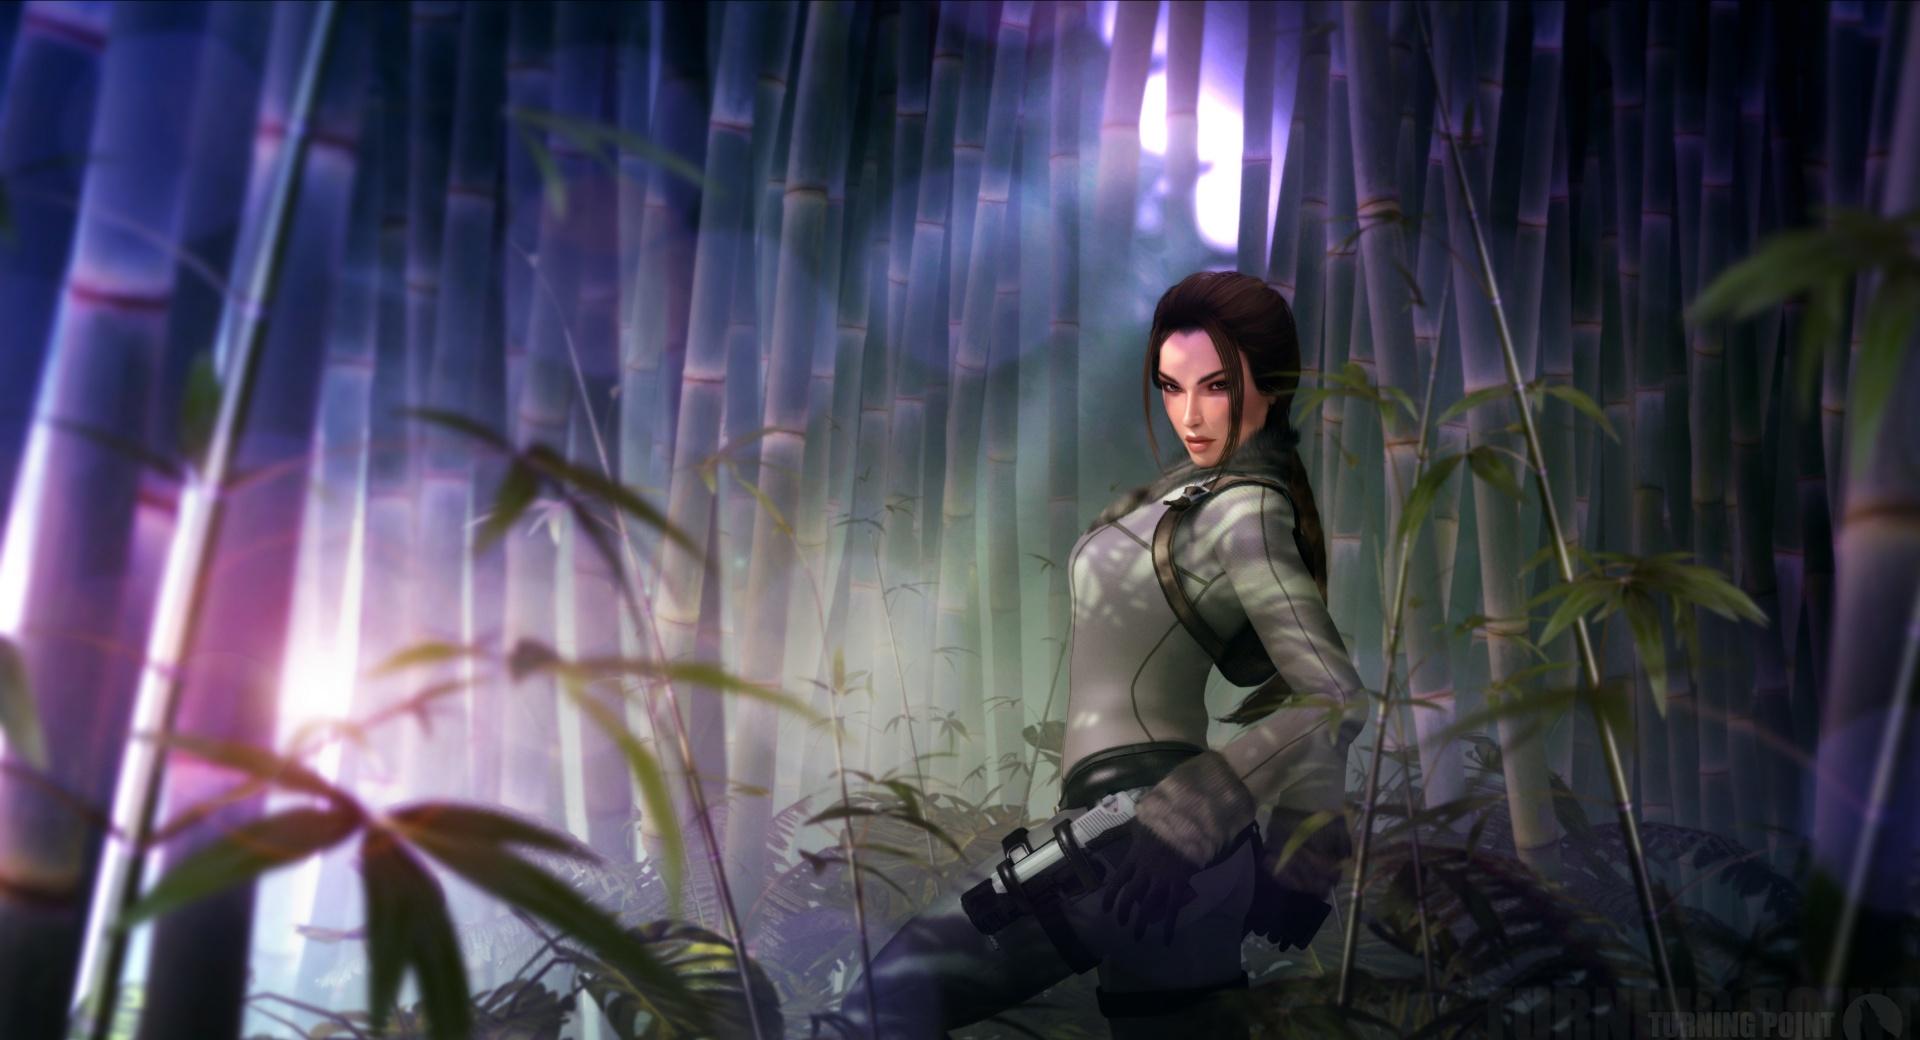 Lara Croft FanArt at 1600 x 1200 size wallpapers HD quality